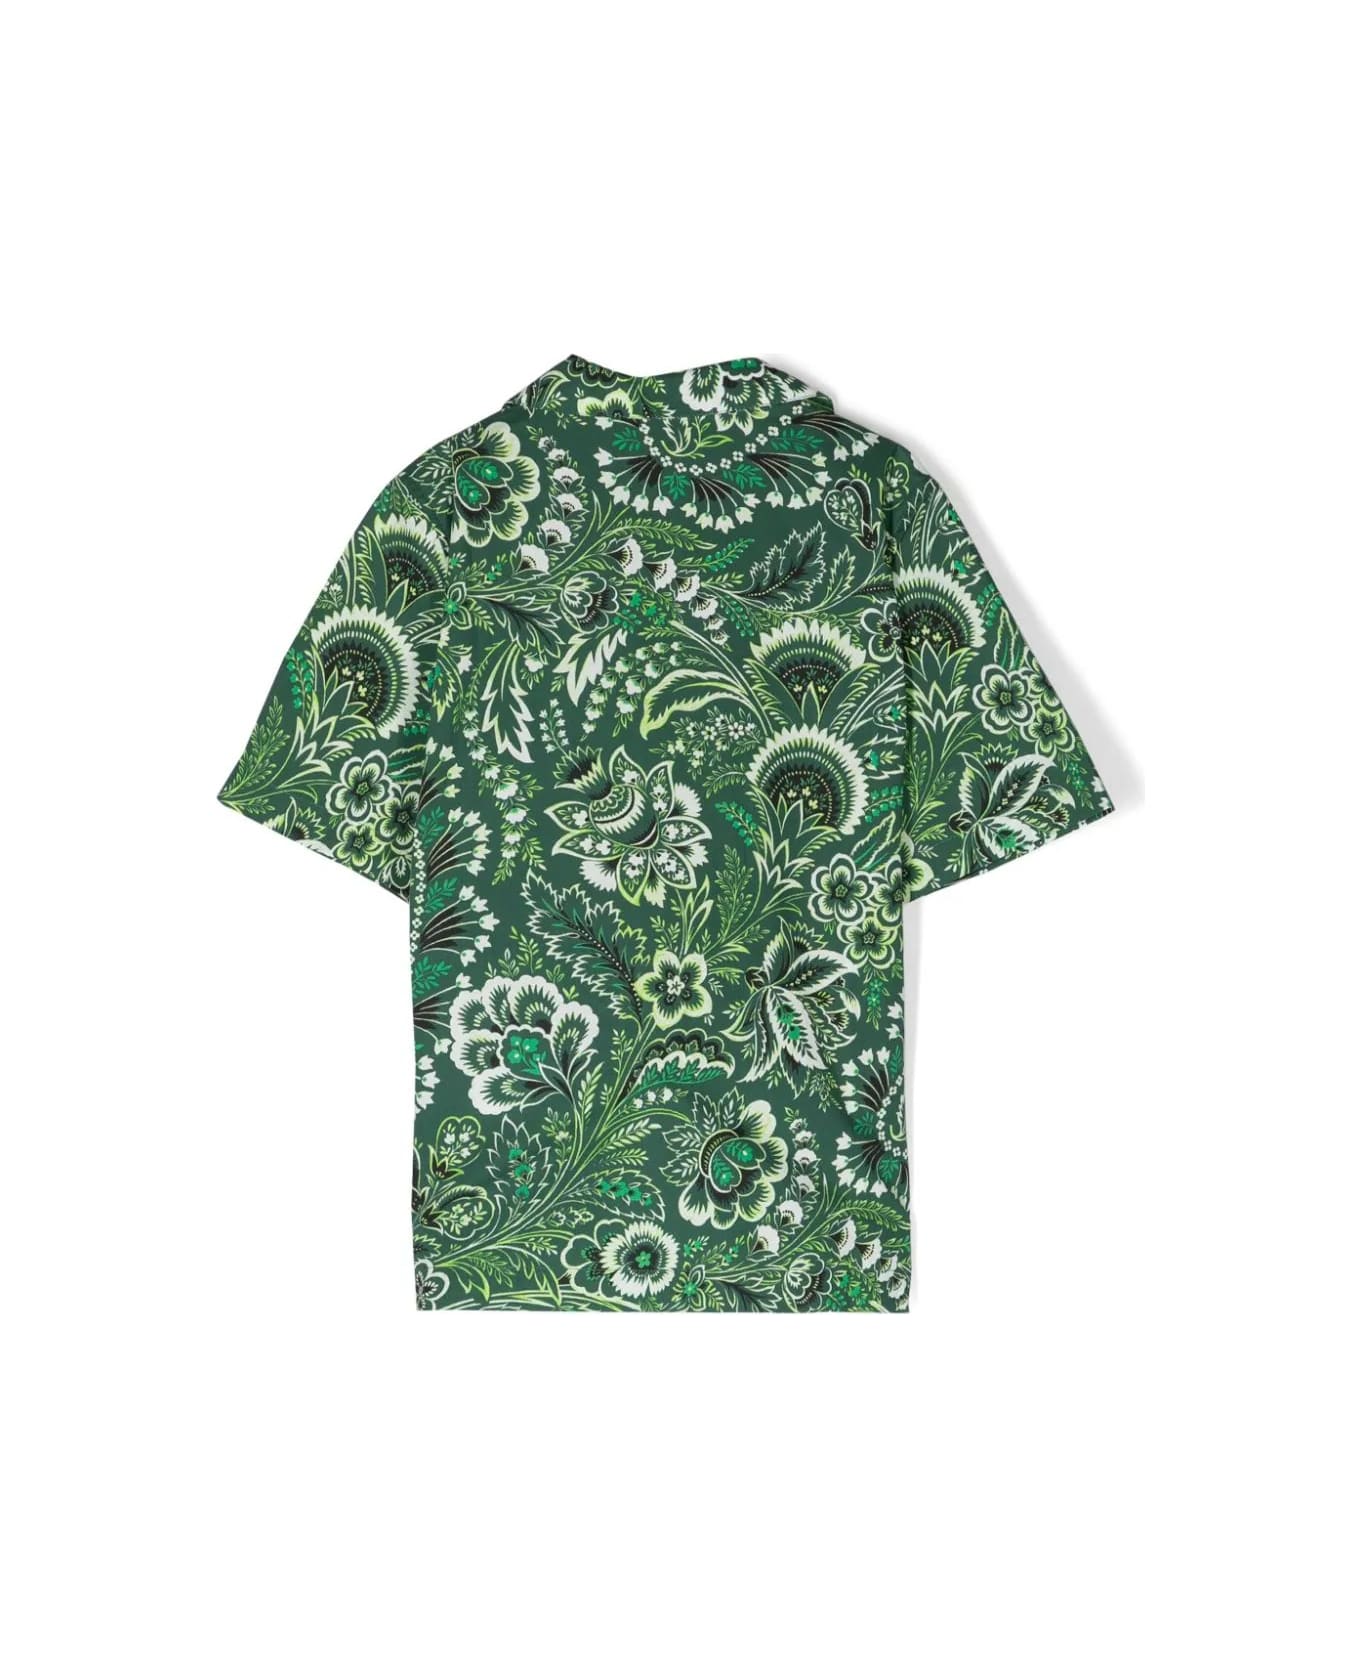 Etro Green Bowling Shirt With Paisley Motif - Green